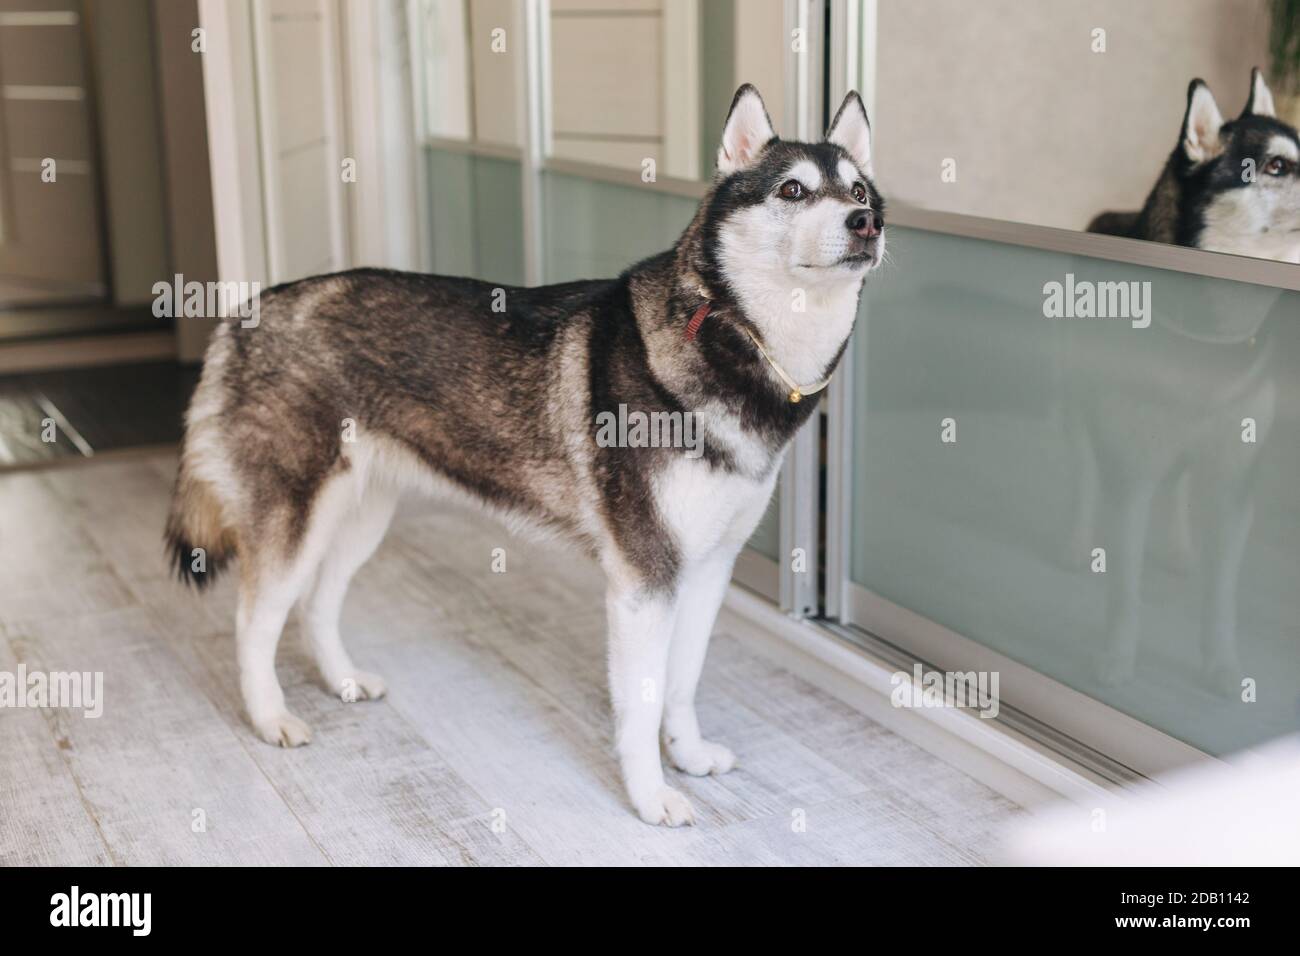 Cute big dog husky standing in living room inddor Stock Photo